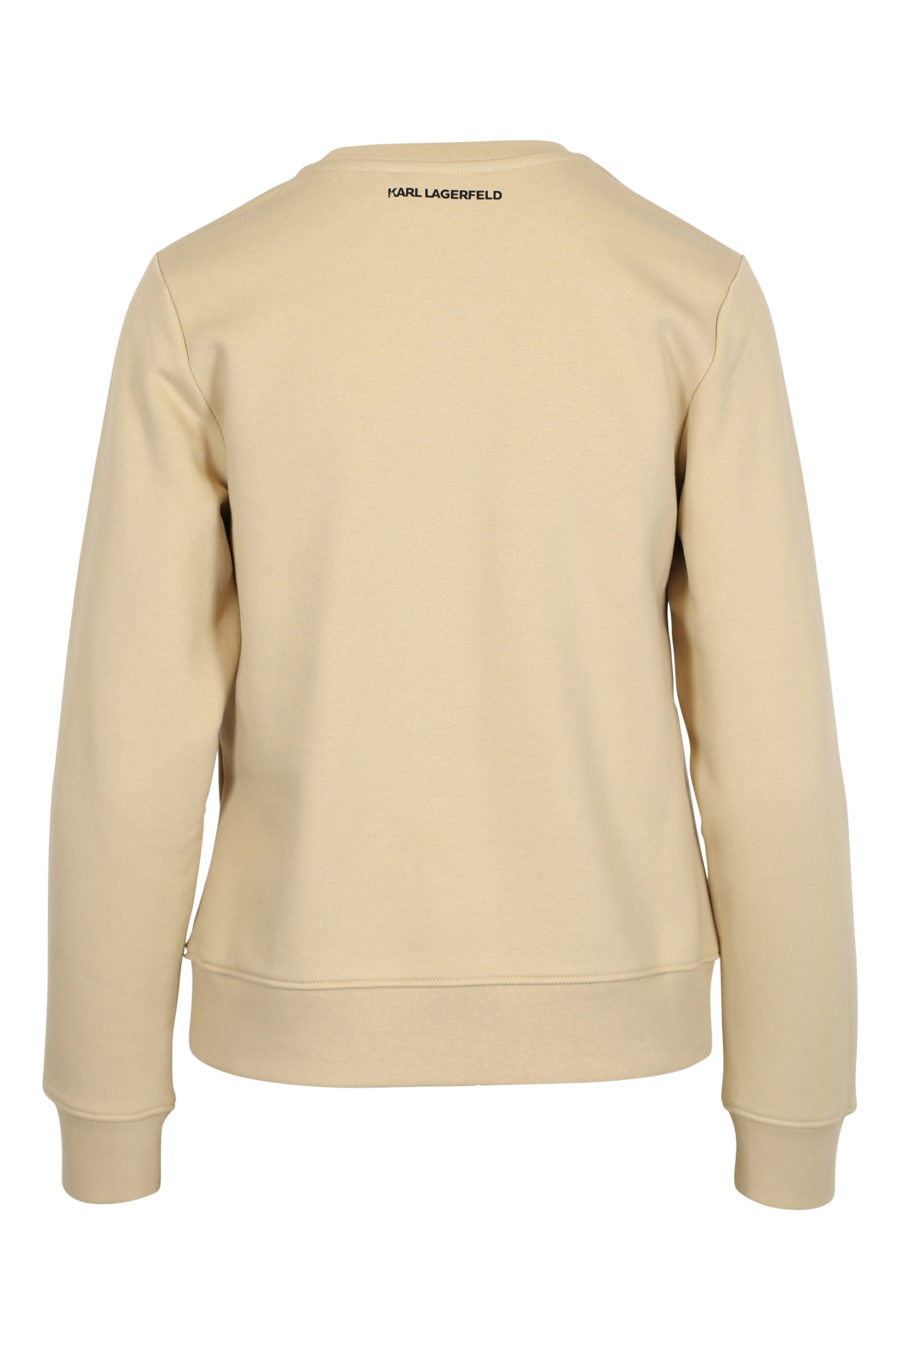 Kamelfarbenes Sweatshirt mit Mini-Strasssteinmuster - IMG 3006